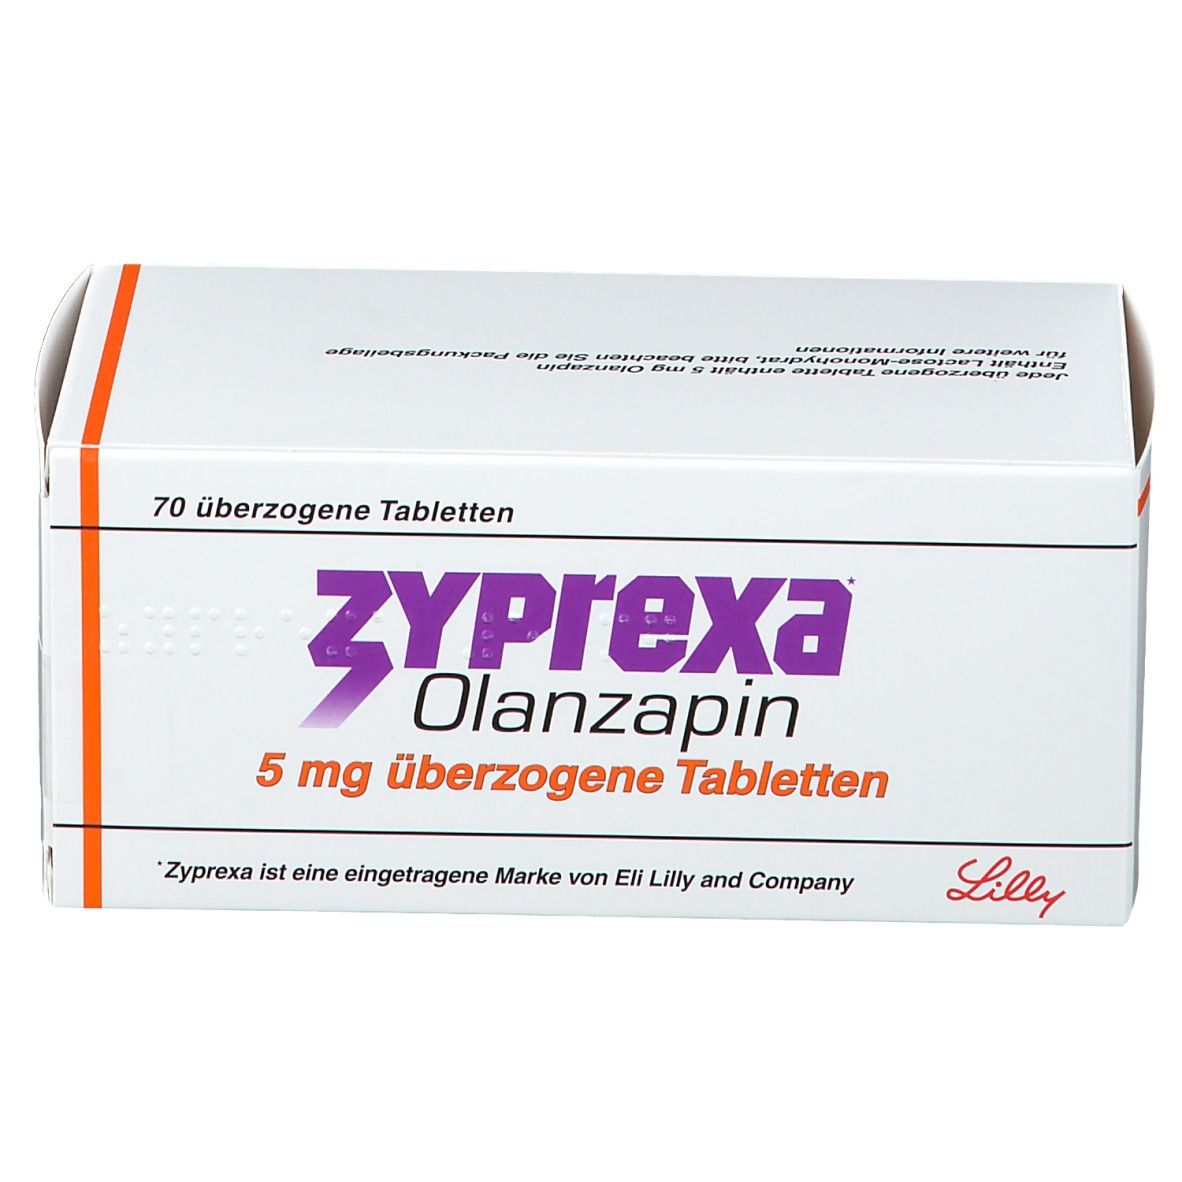 ZYPREXA 5 mg überzogene Tabletten